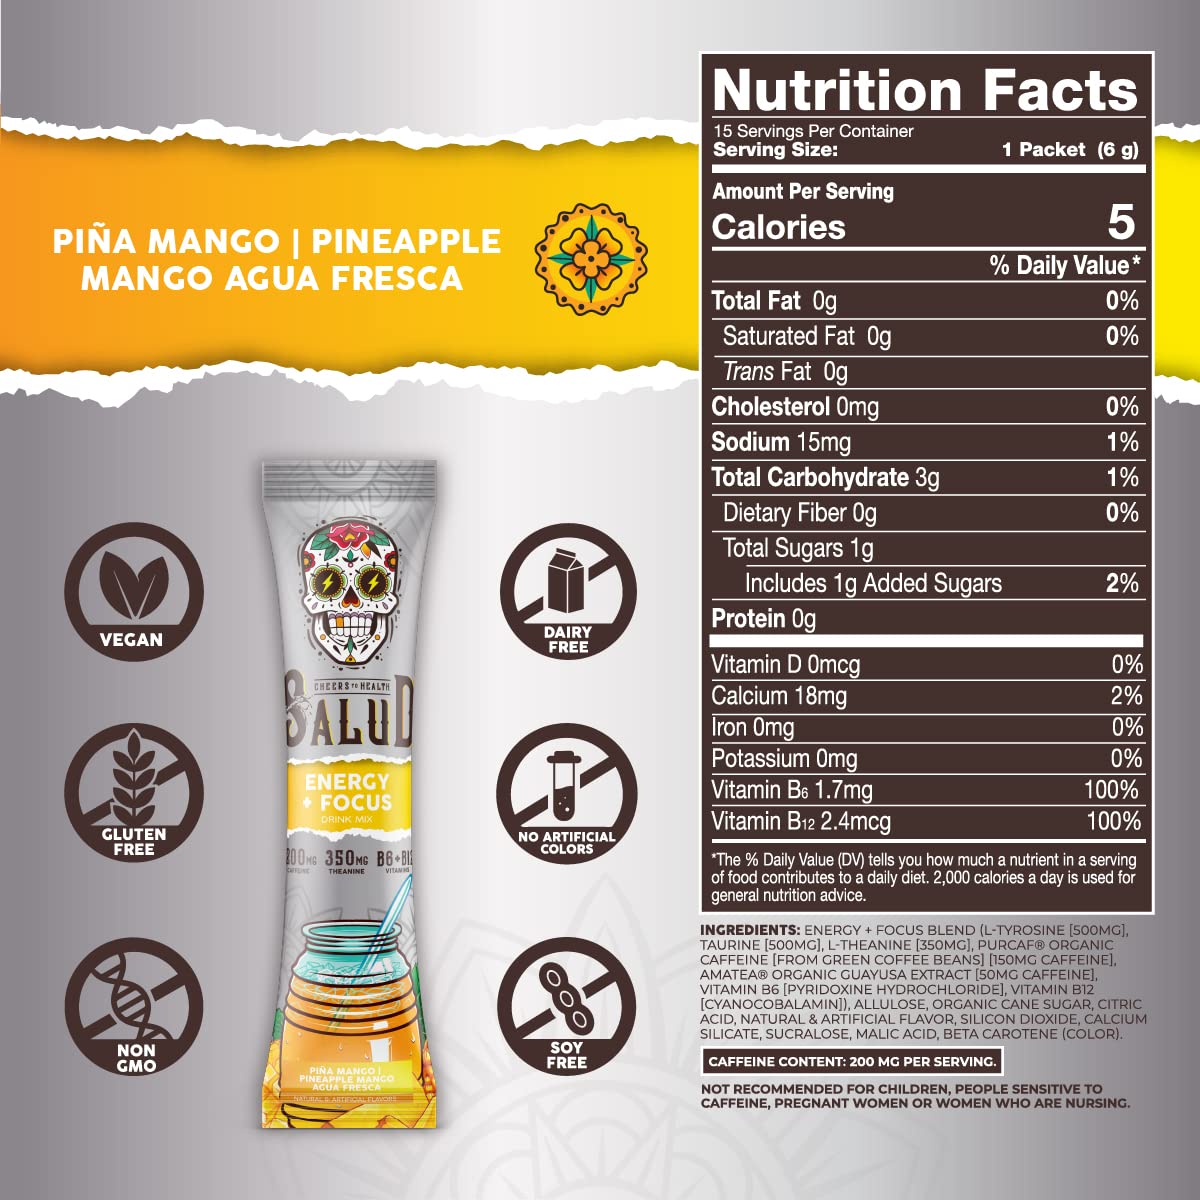 Salud 2-Pack |2-in-1 Energy + Focus (Pineapple Mango) & Hydration + Immunity (Lemonade) – 15 Servings Each, Agua Fresca Drink Mix, Non-GMO, Gluten Free, Vegan, Low Calorie, 1g of Sugar